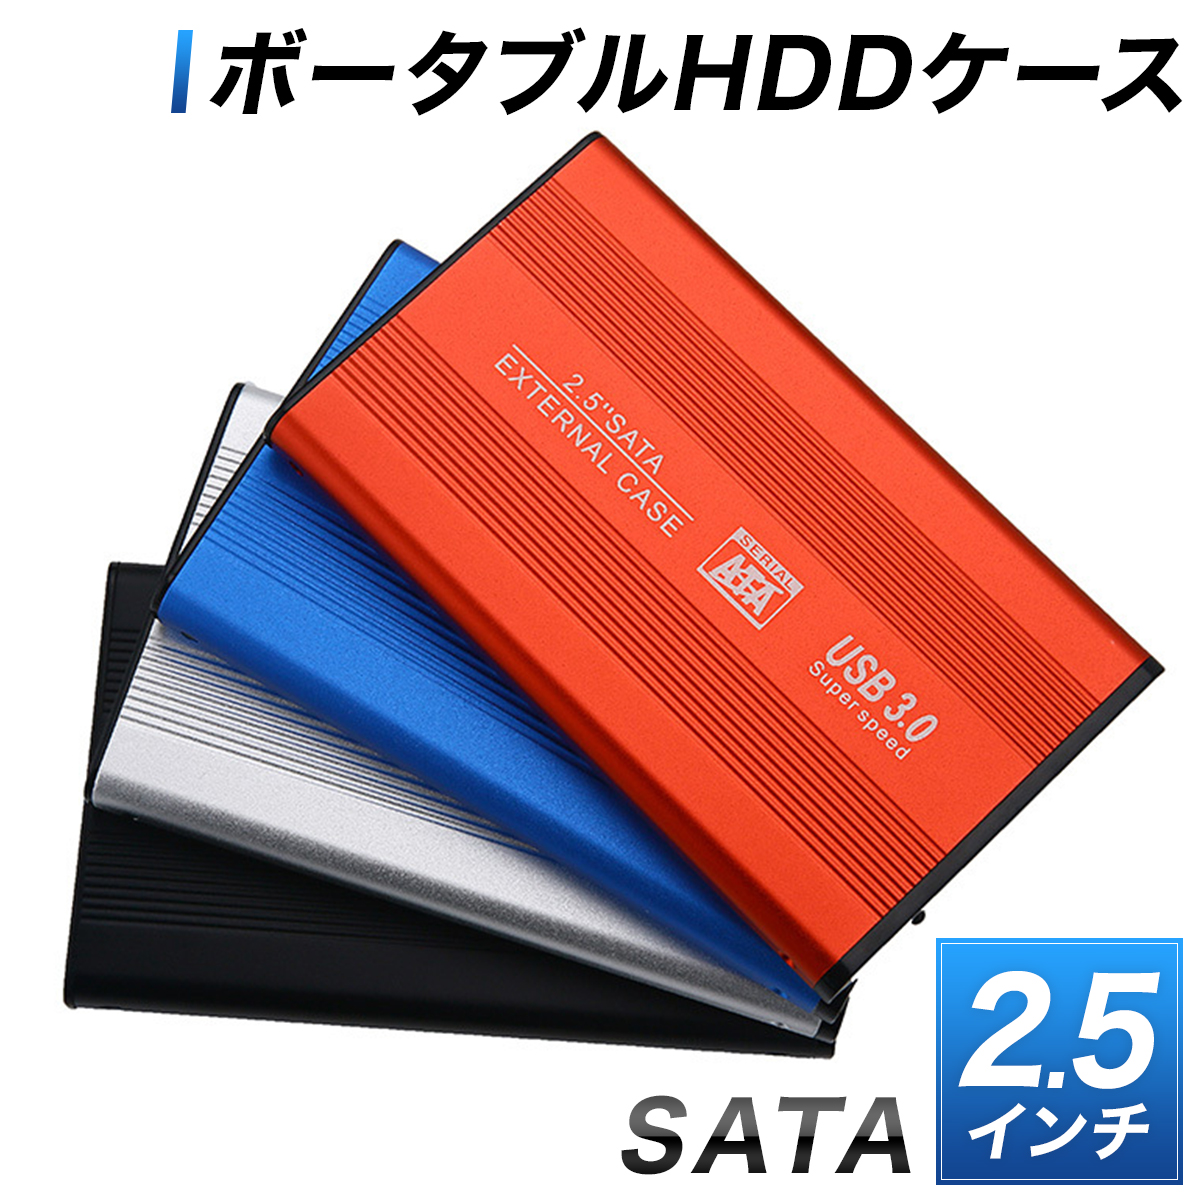 HDDケース 2.5インチ USB3.0 SSD HDD SATA 外付け 外部電源不要 ケース 価格 交渉 送料無料 軽量 アルミ 送料無料 最も優遇 ハードケース 耐久性